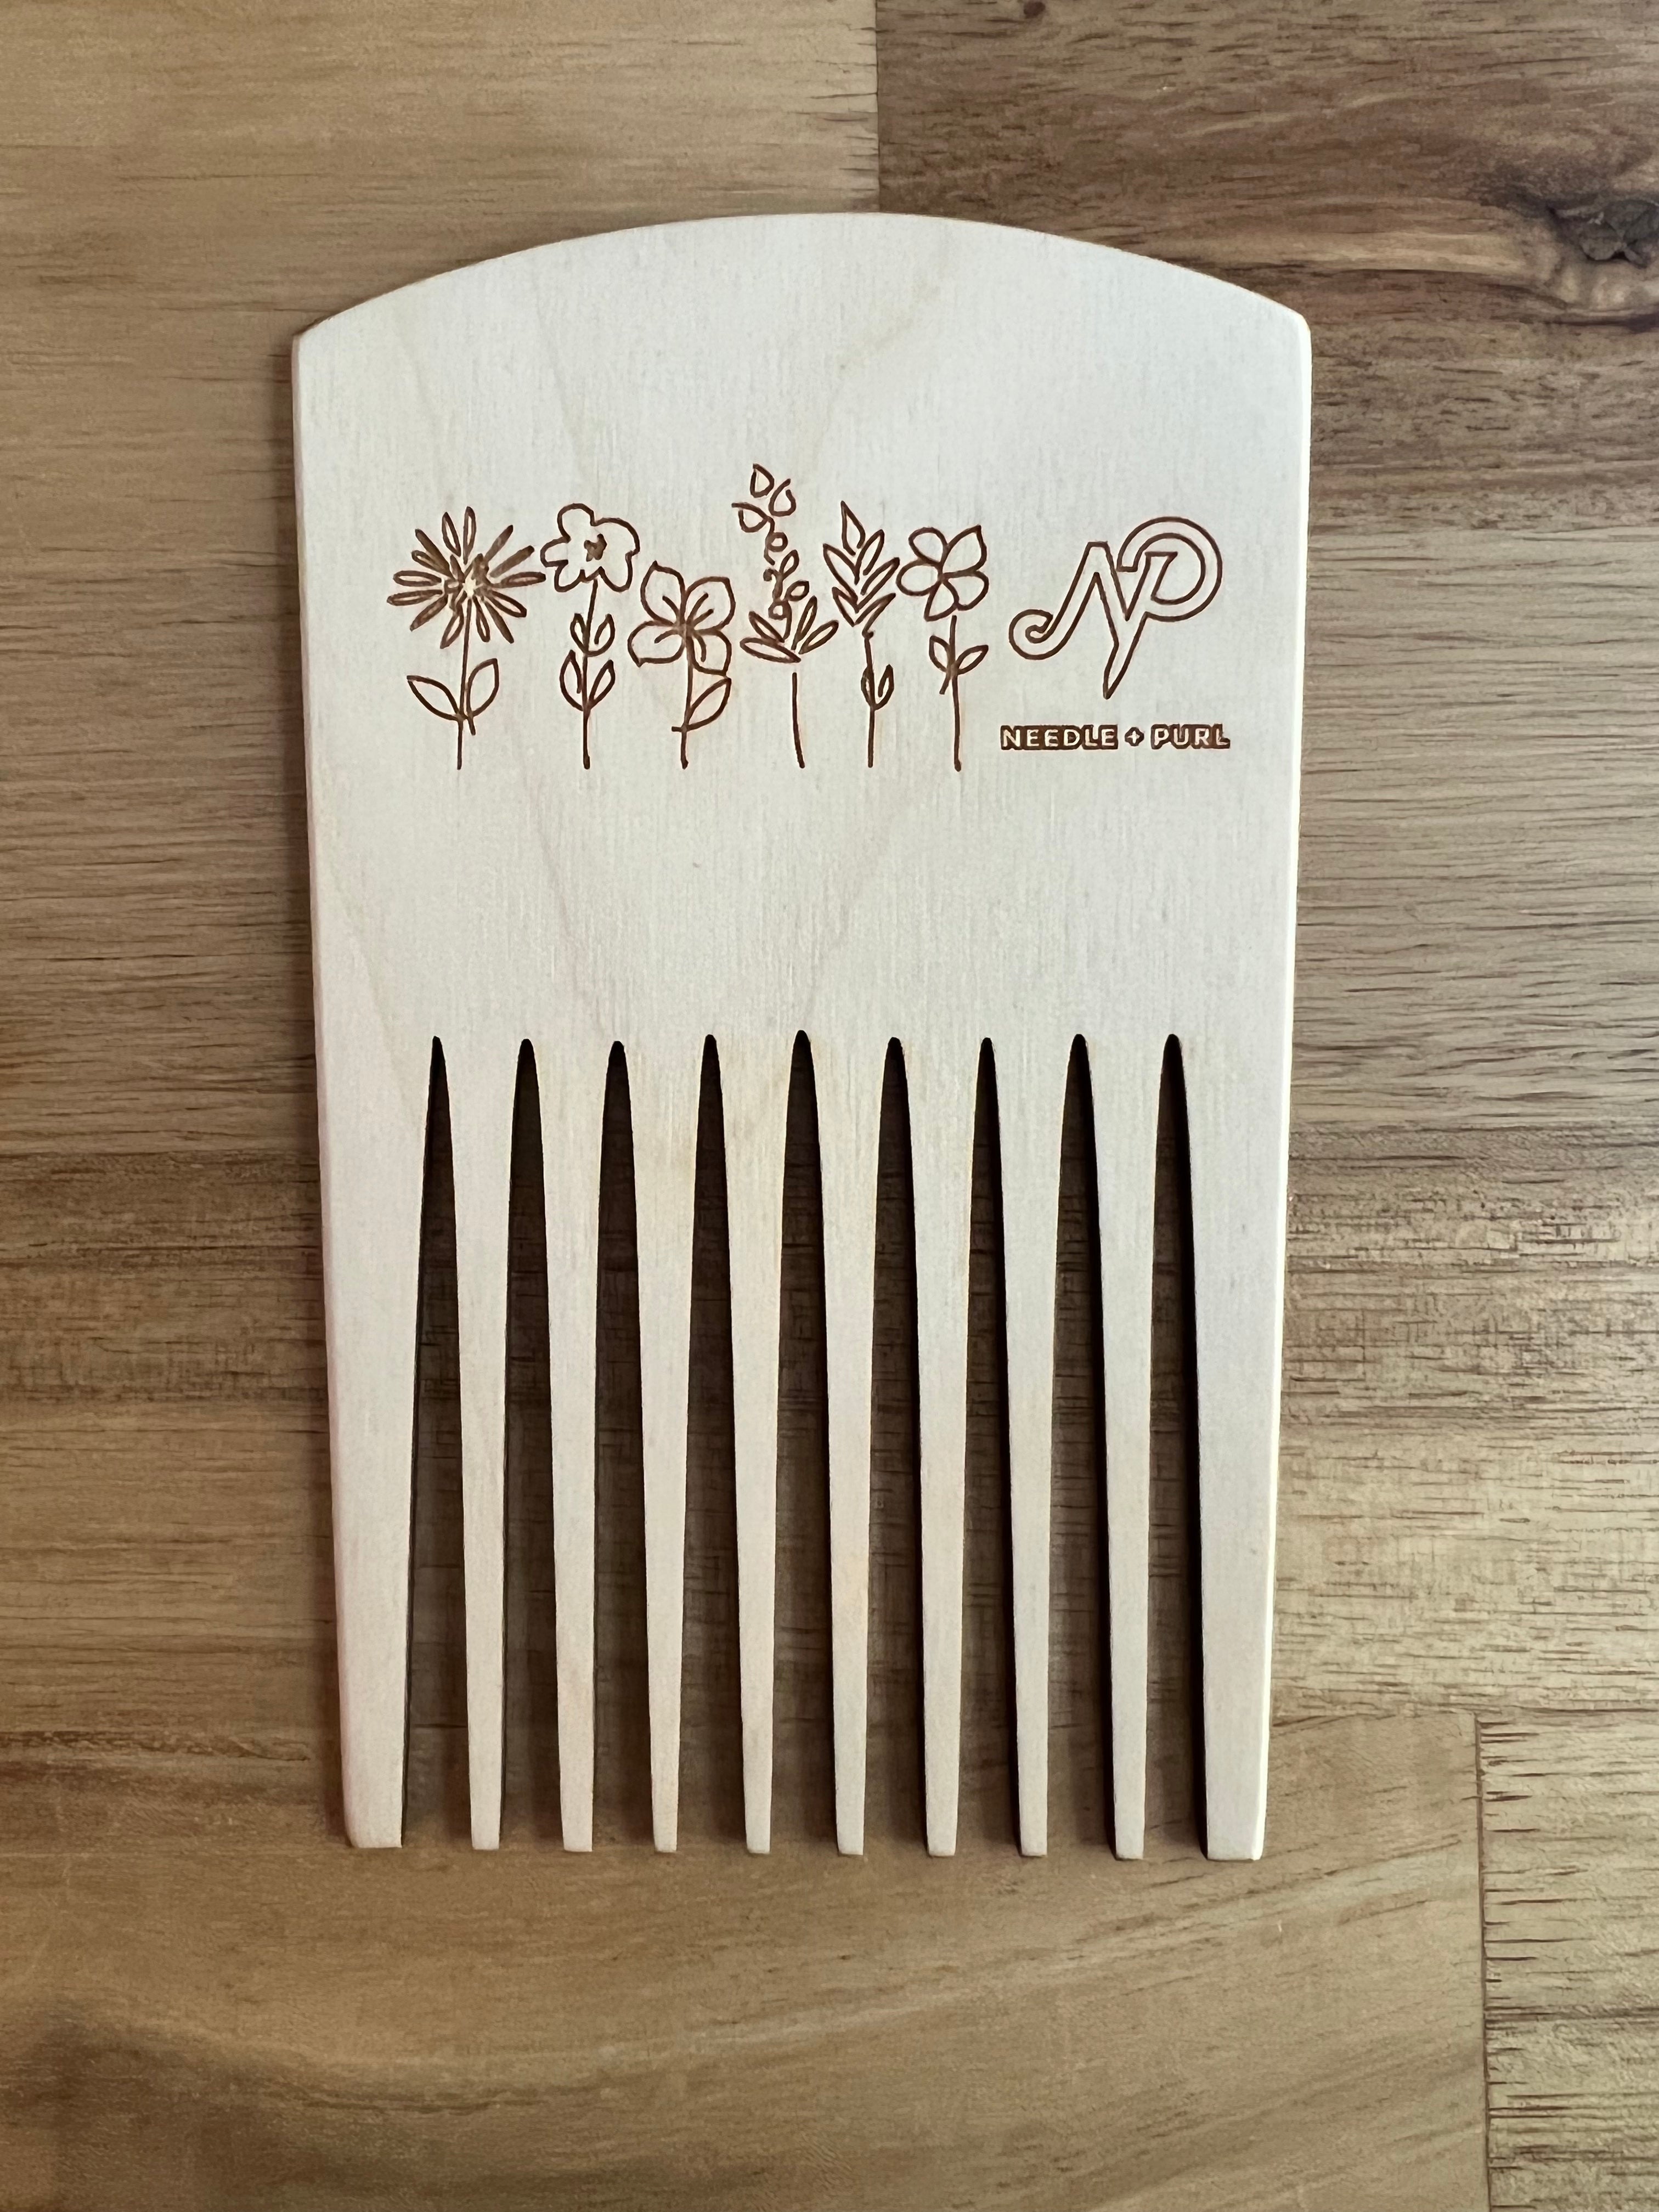 Wood Weaving Comb – Needle + Purl